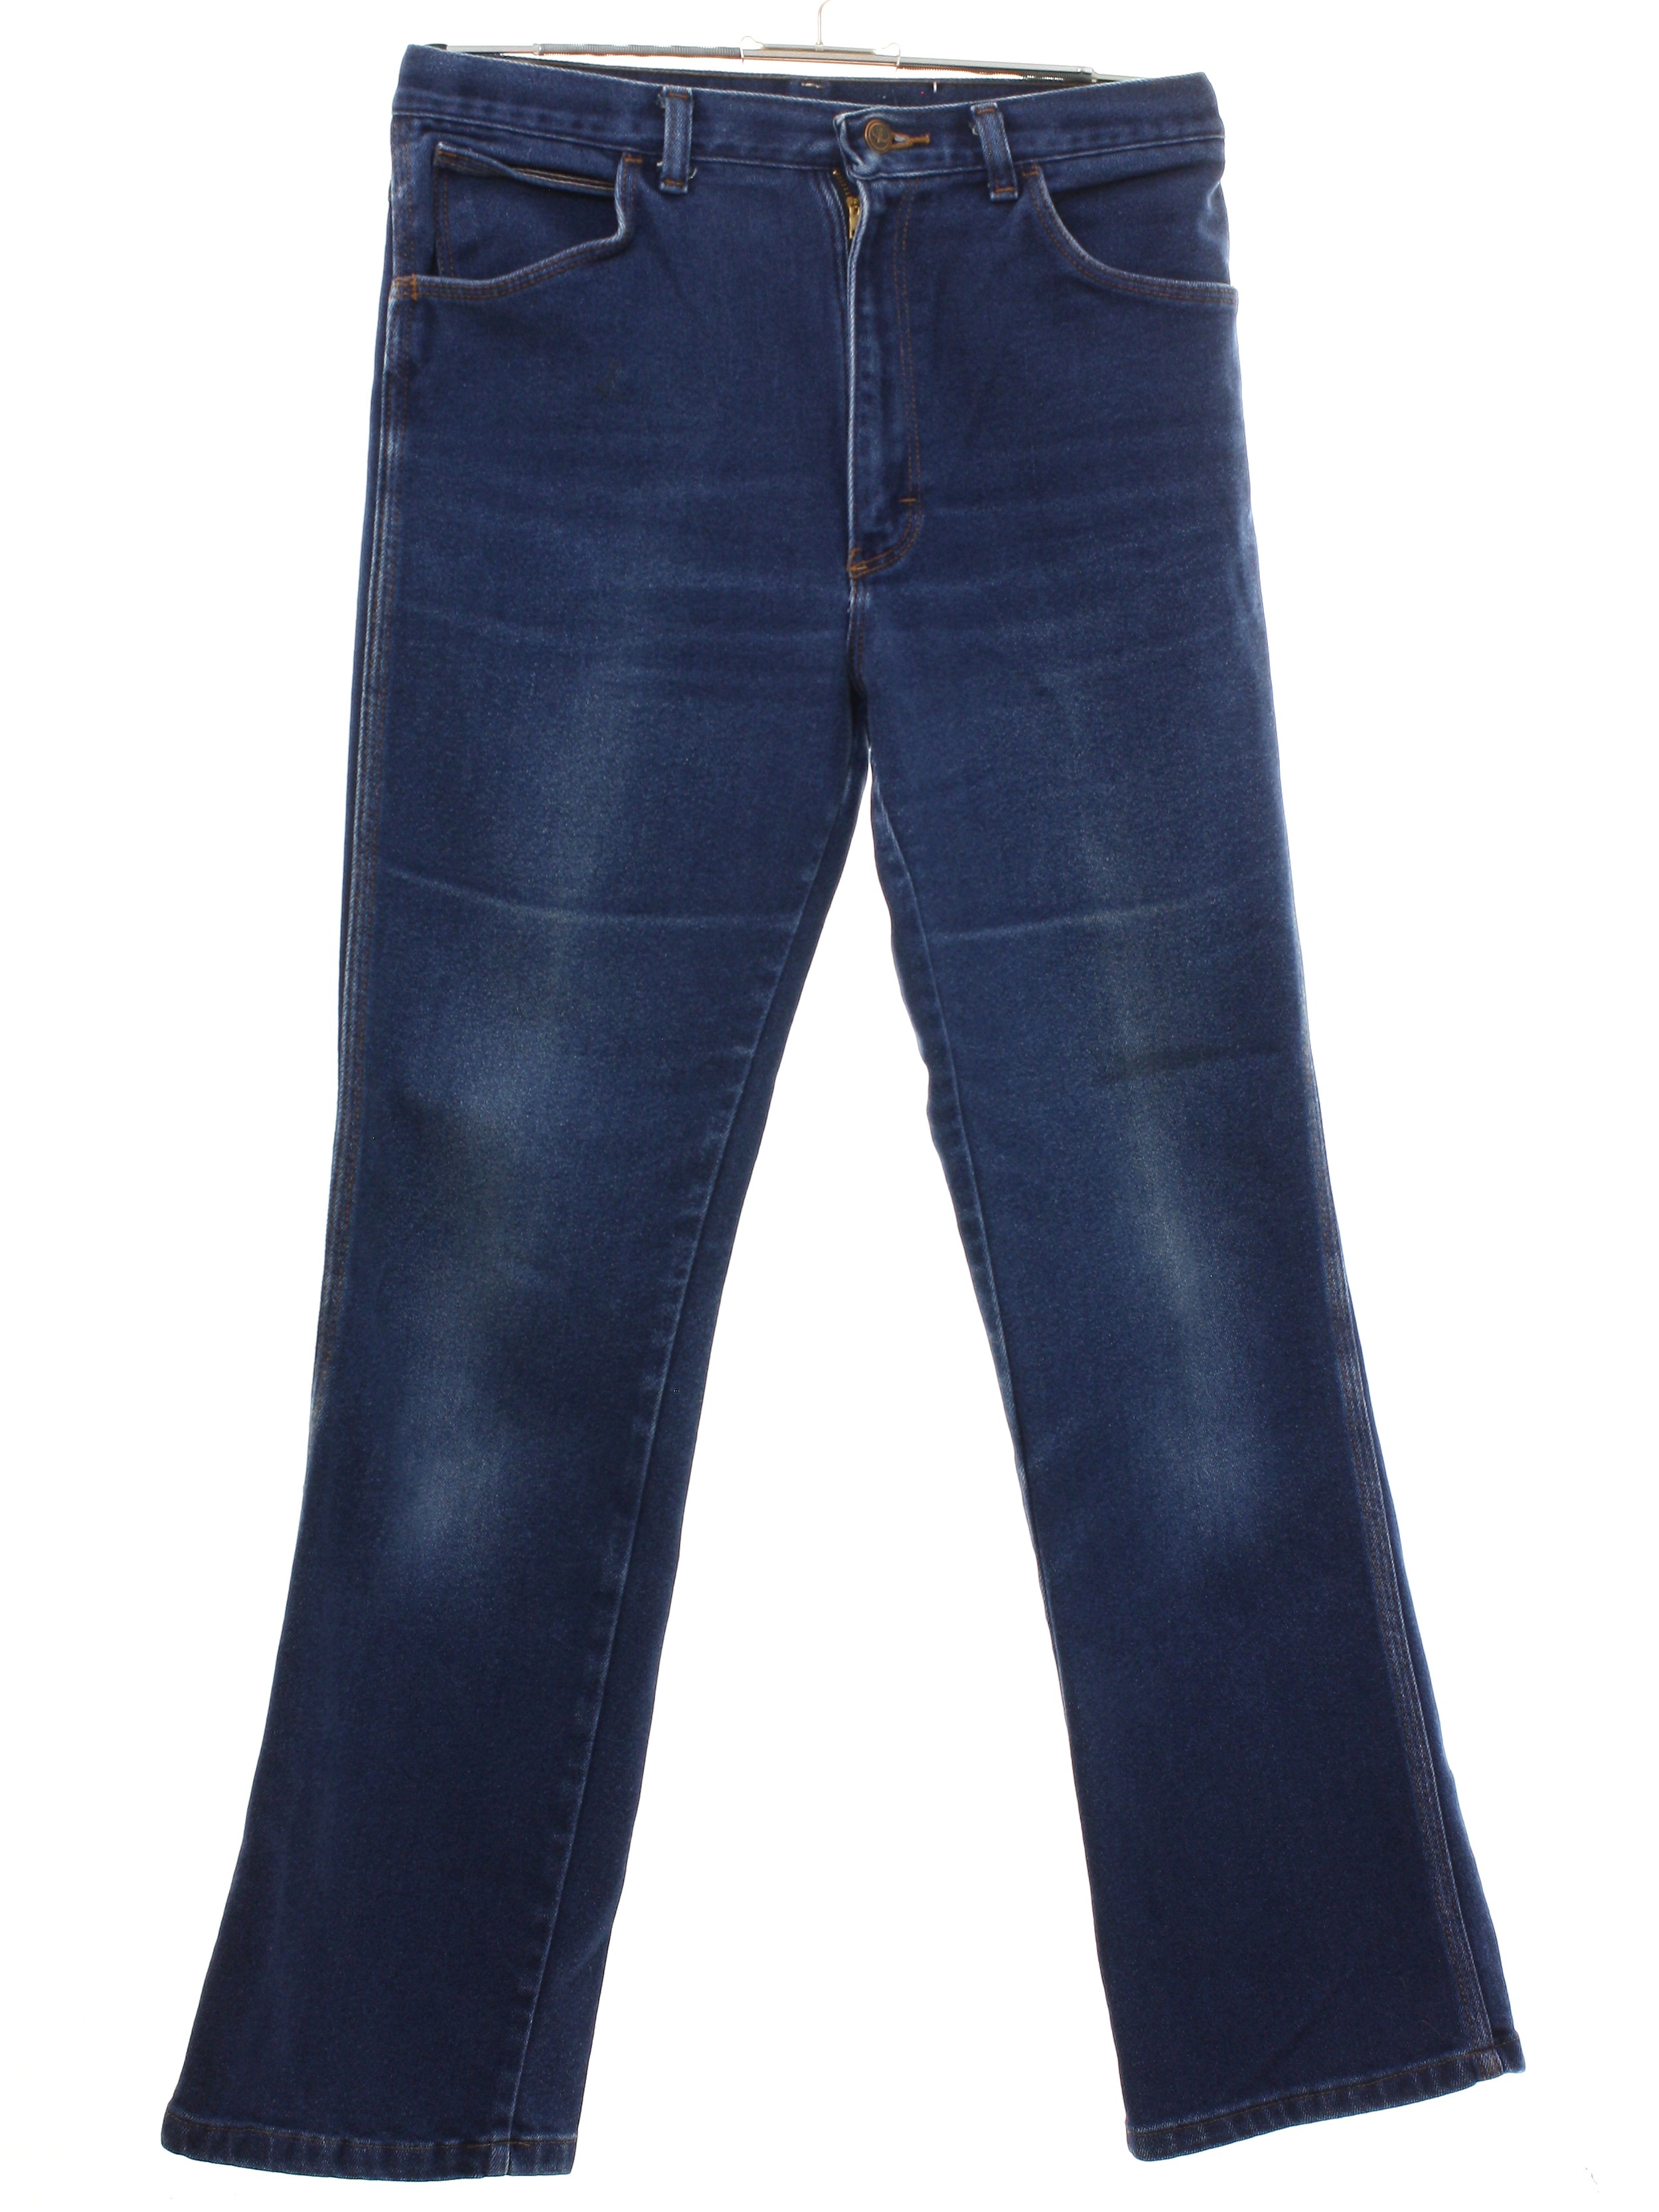 sheplers mens jeans